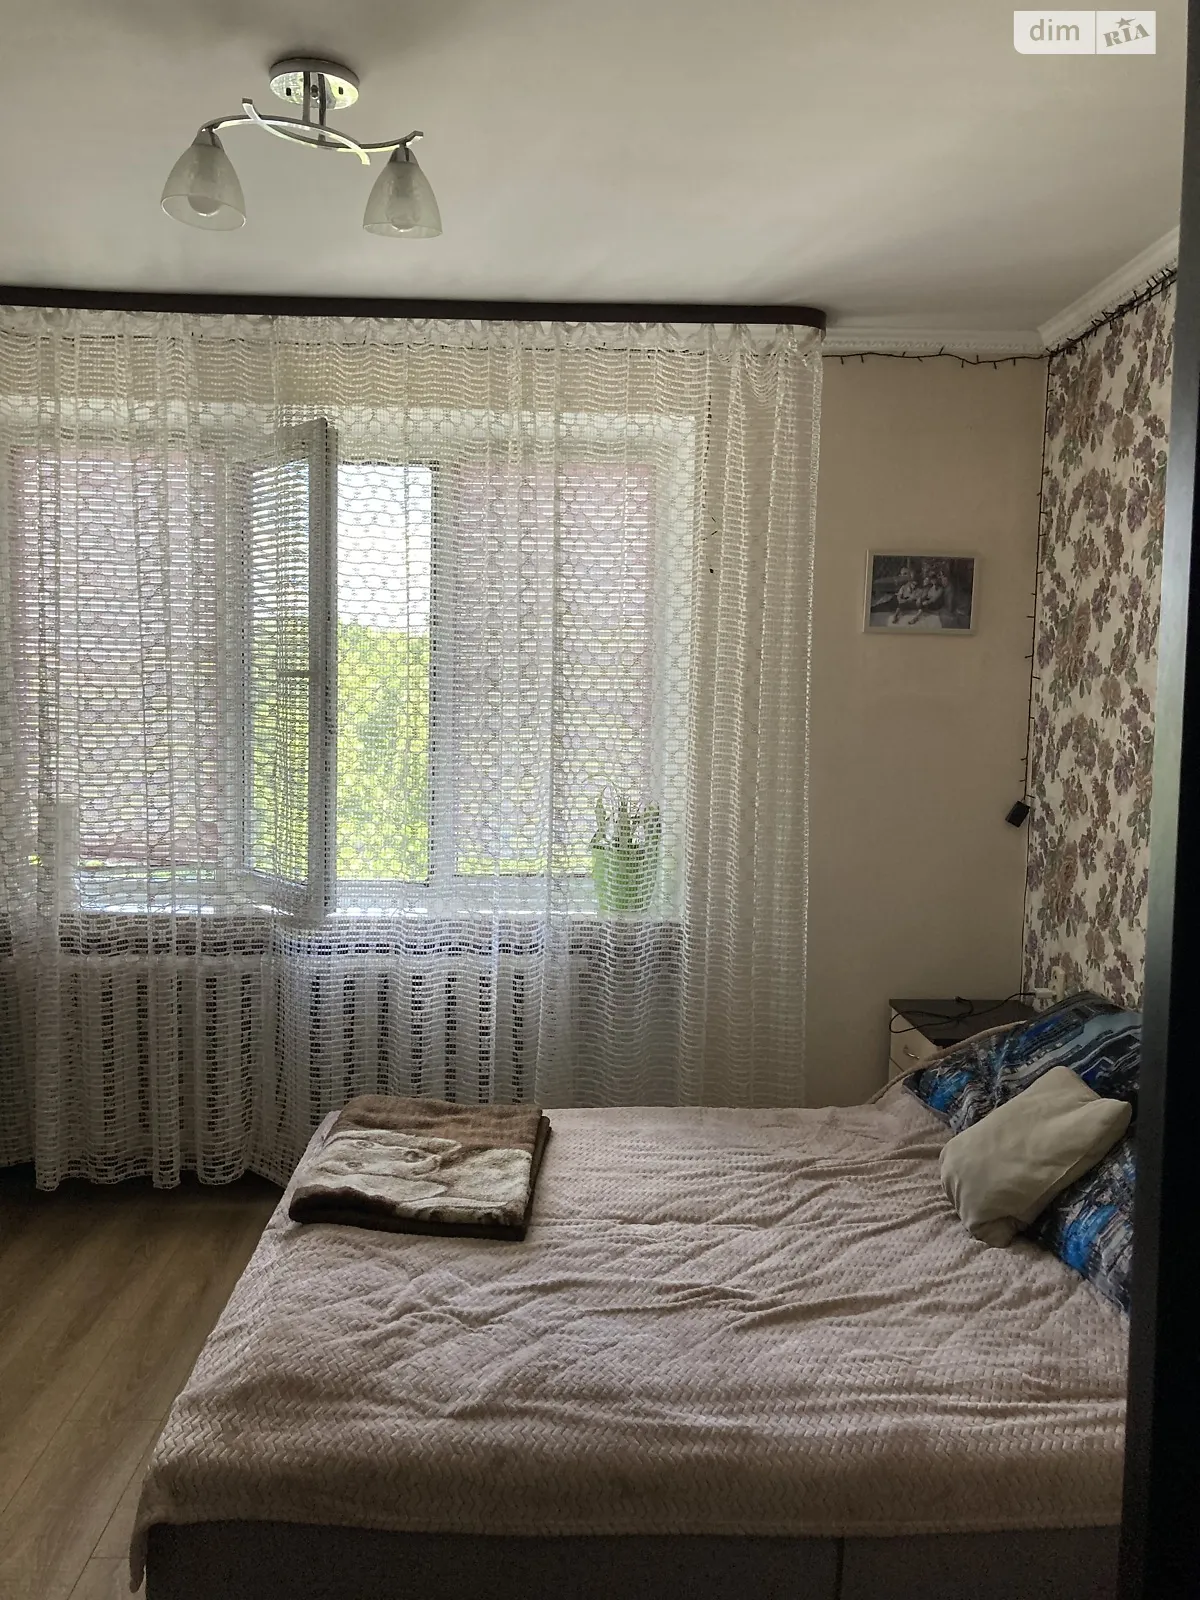 4-кімнатна квартира 62 кв. м у Луцьку, цена: 55000 $